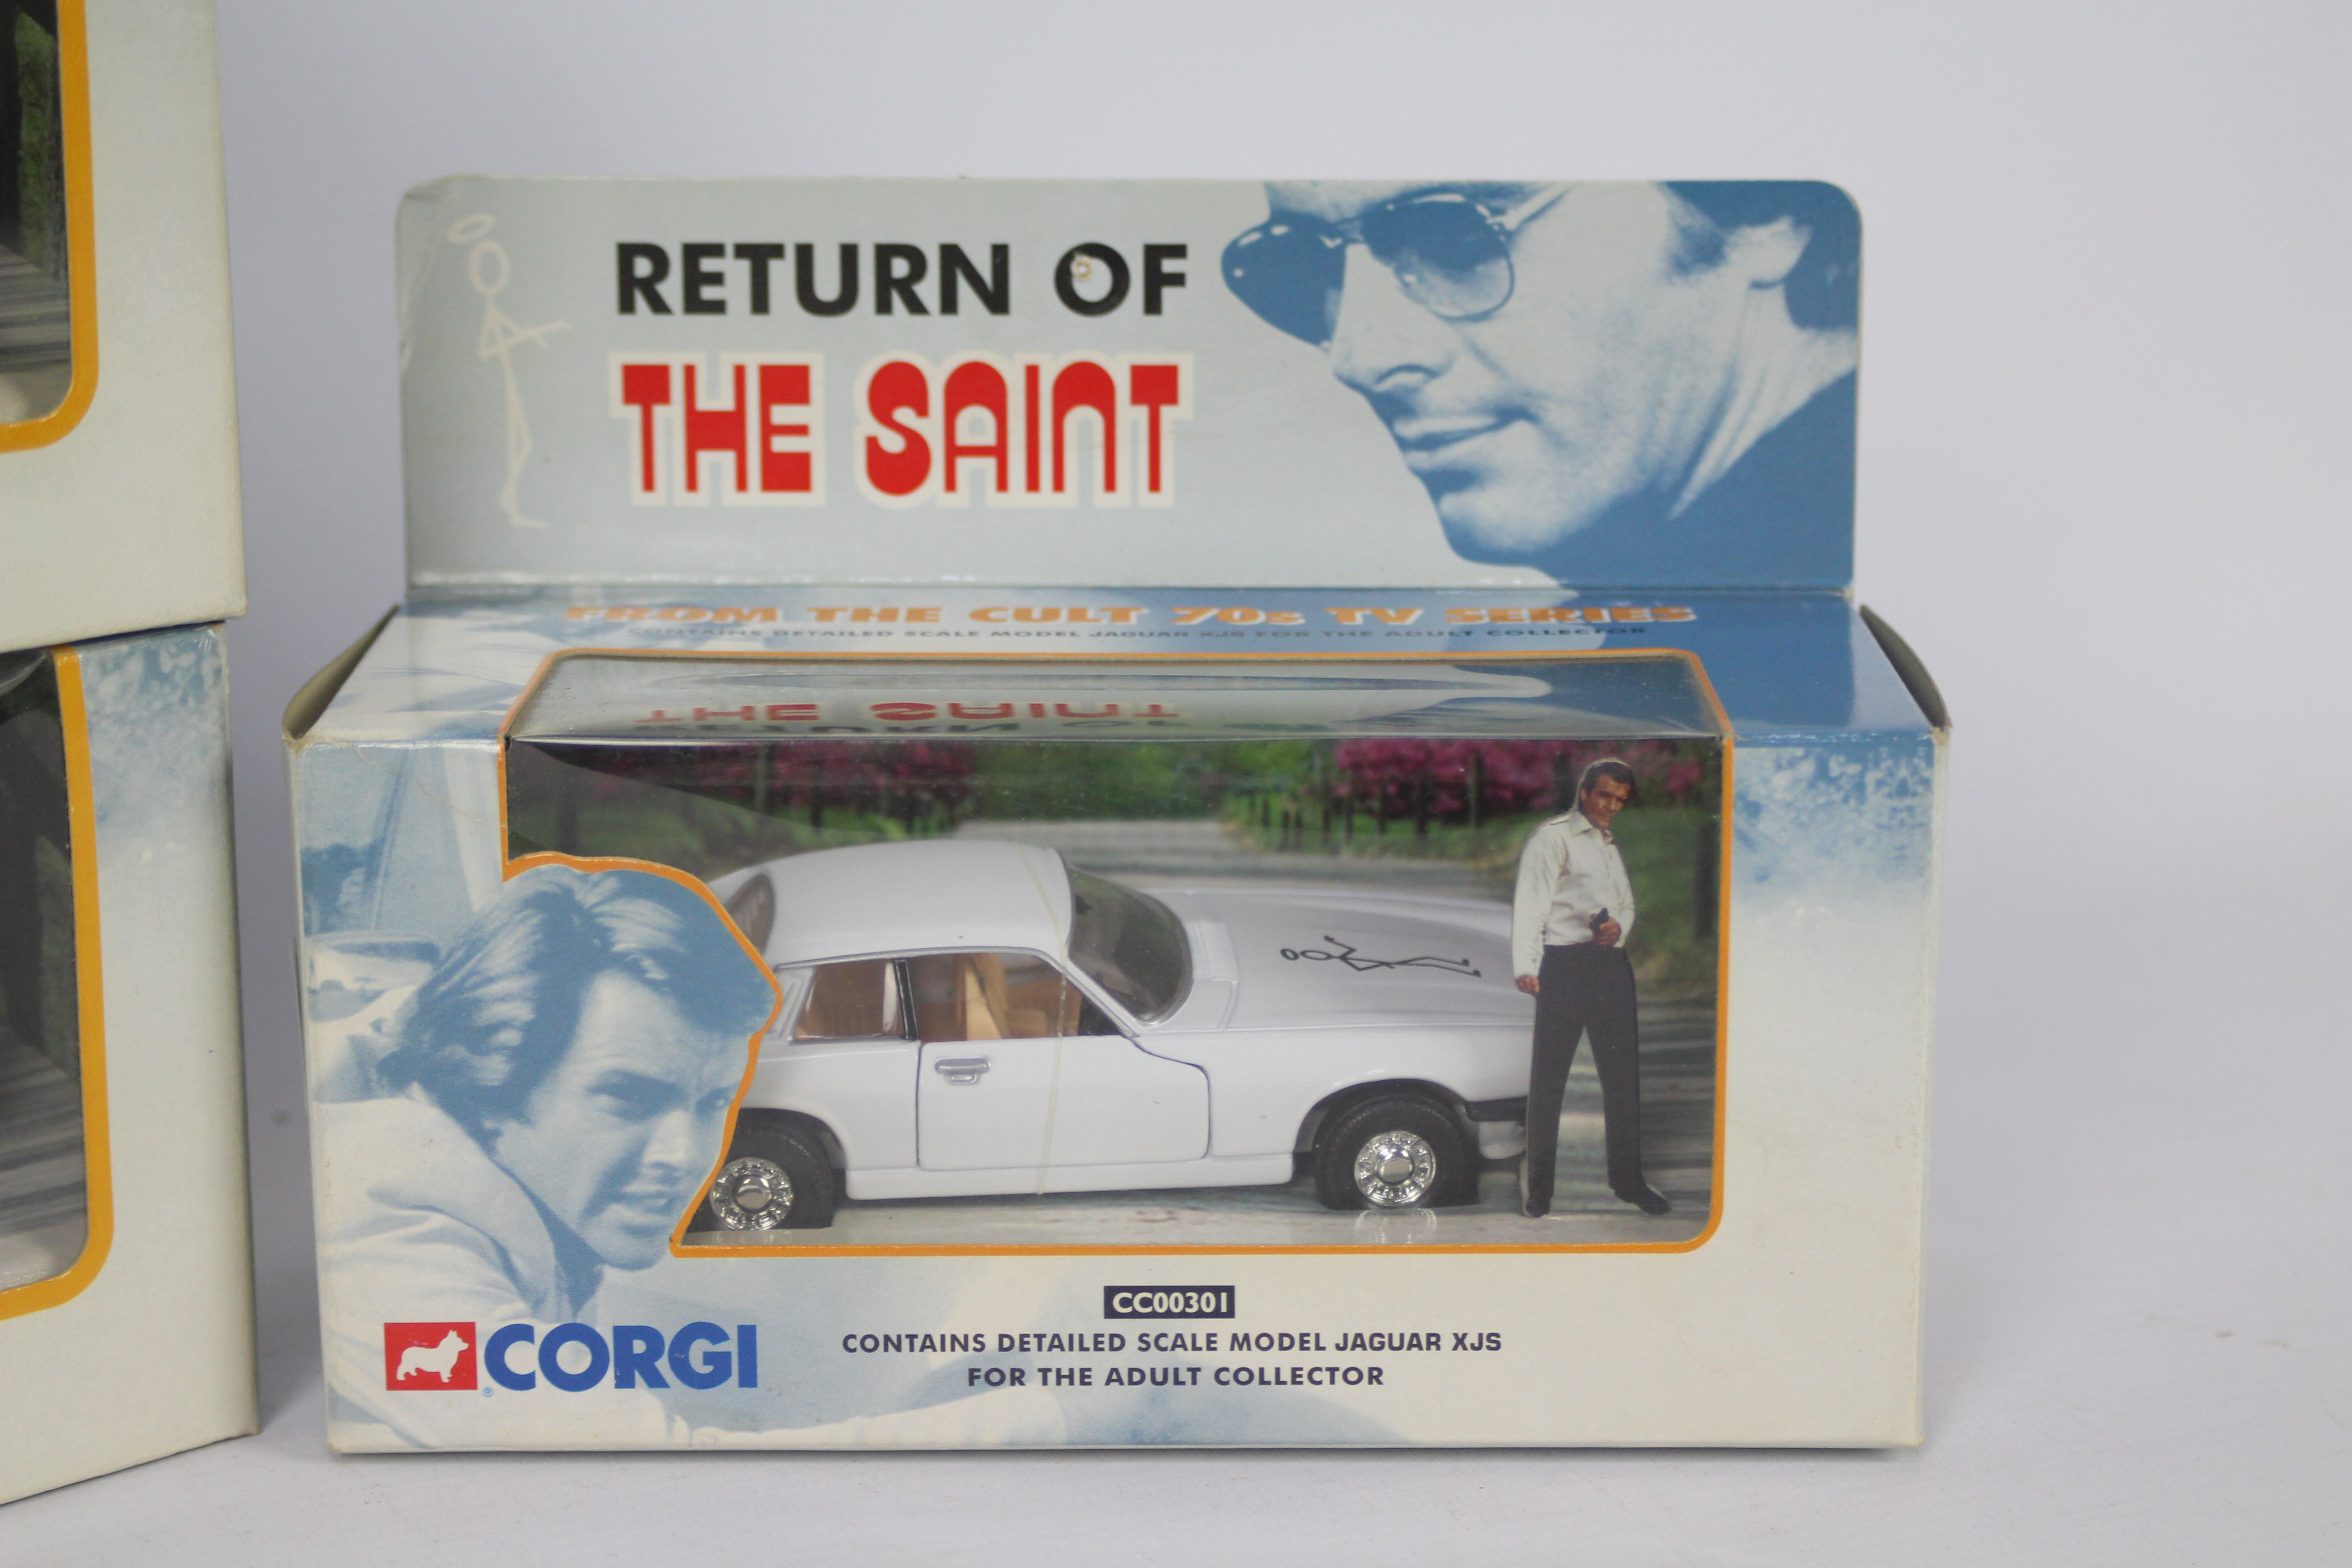 Corgi - Three boxed TV related 'Return of the Saint' diecast model Jaguar XJS vehicles from Corgi. - Image 2 of 3